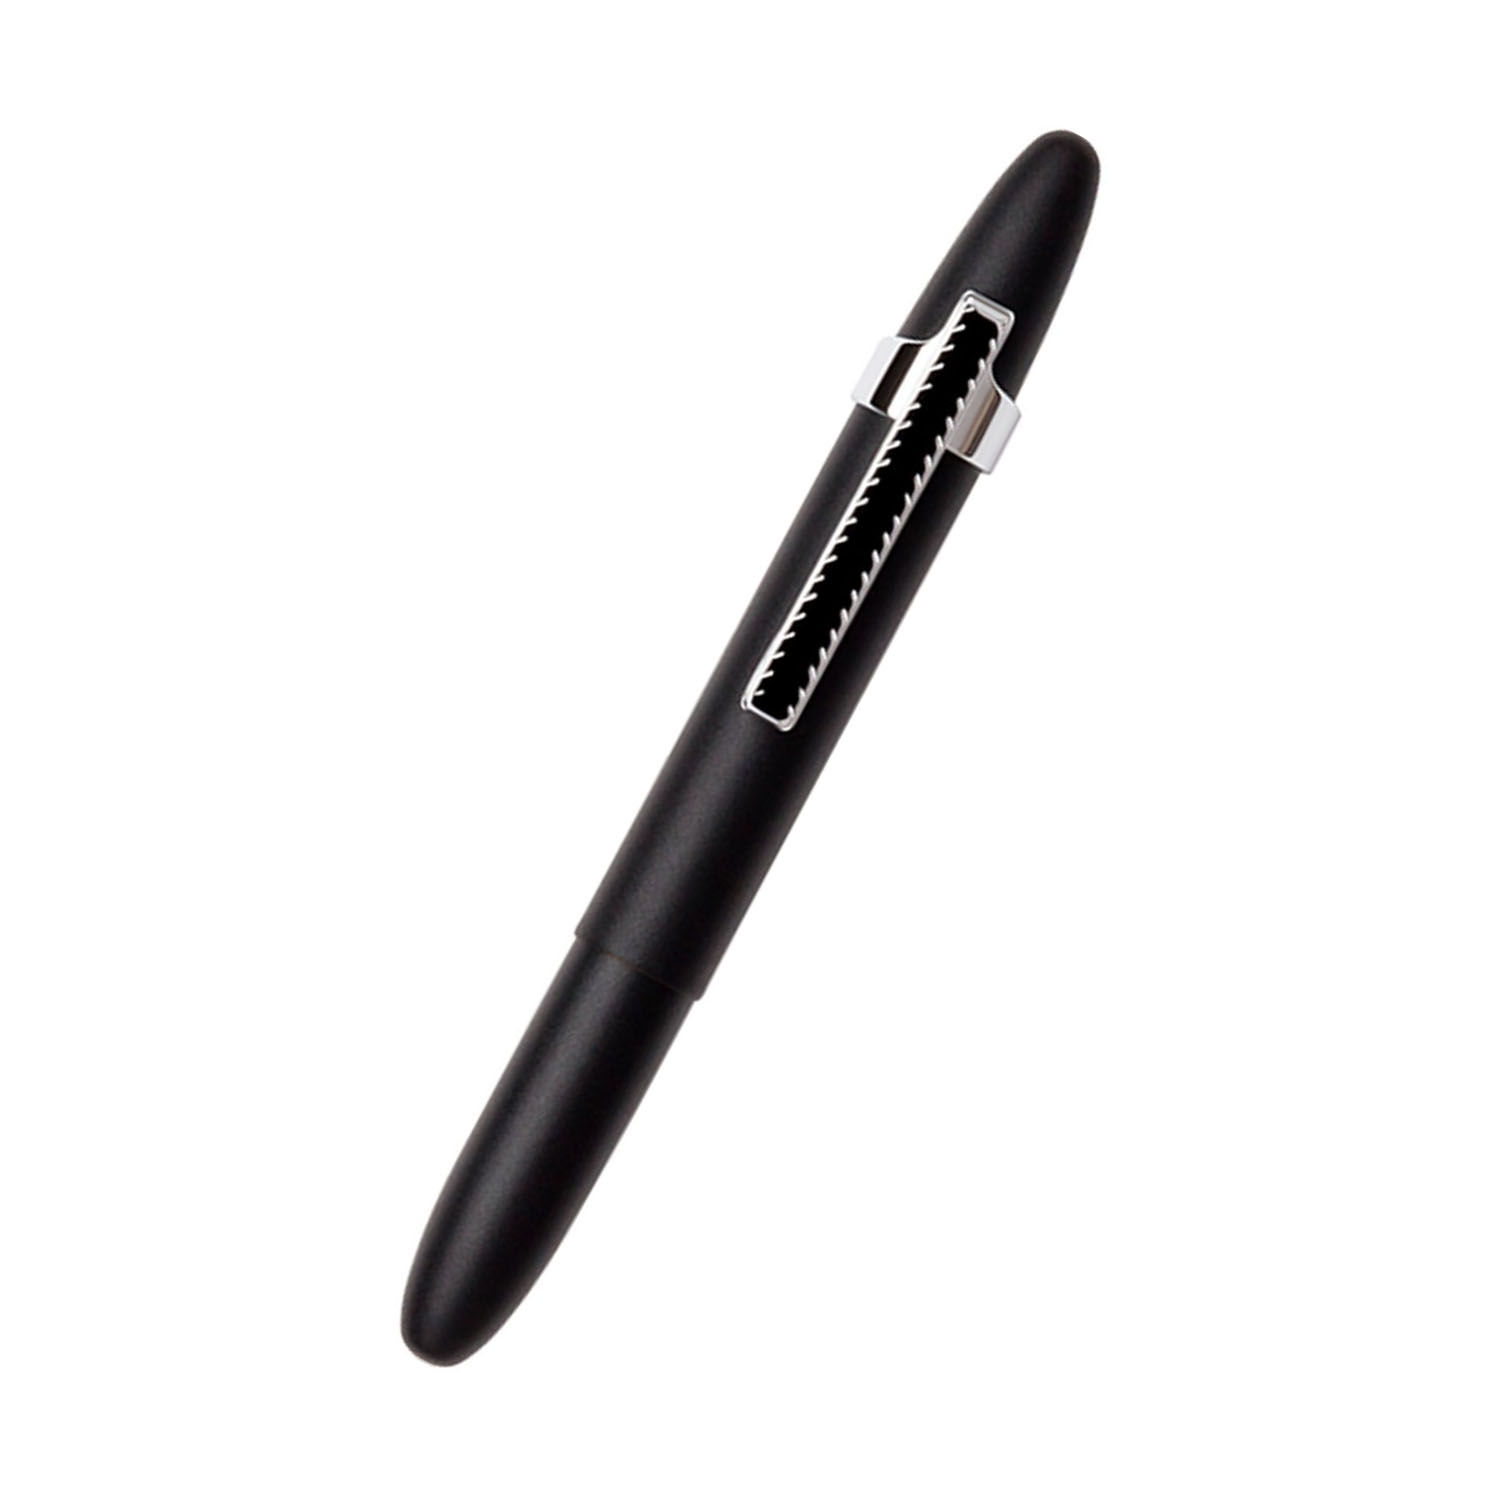 Fisher Space 400BC-CL Bullet Ballpoint pen with Chrome clip - Matte Black & Chrome